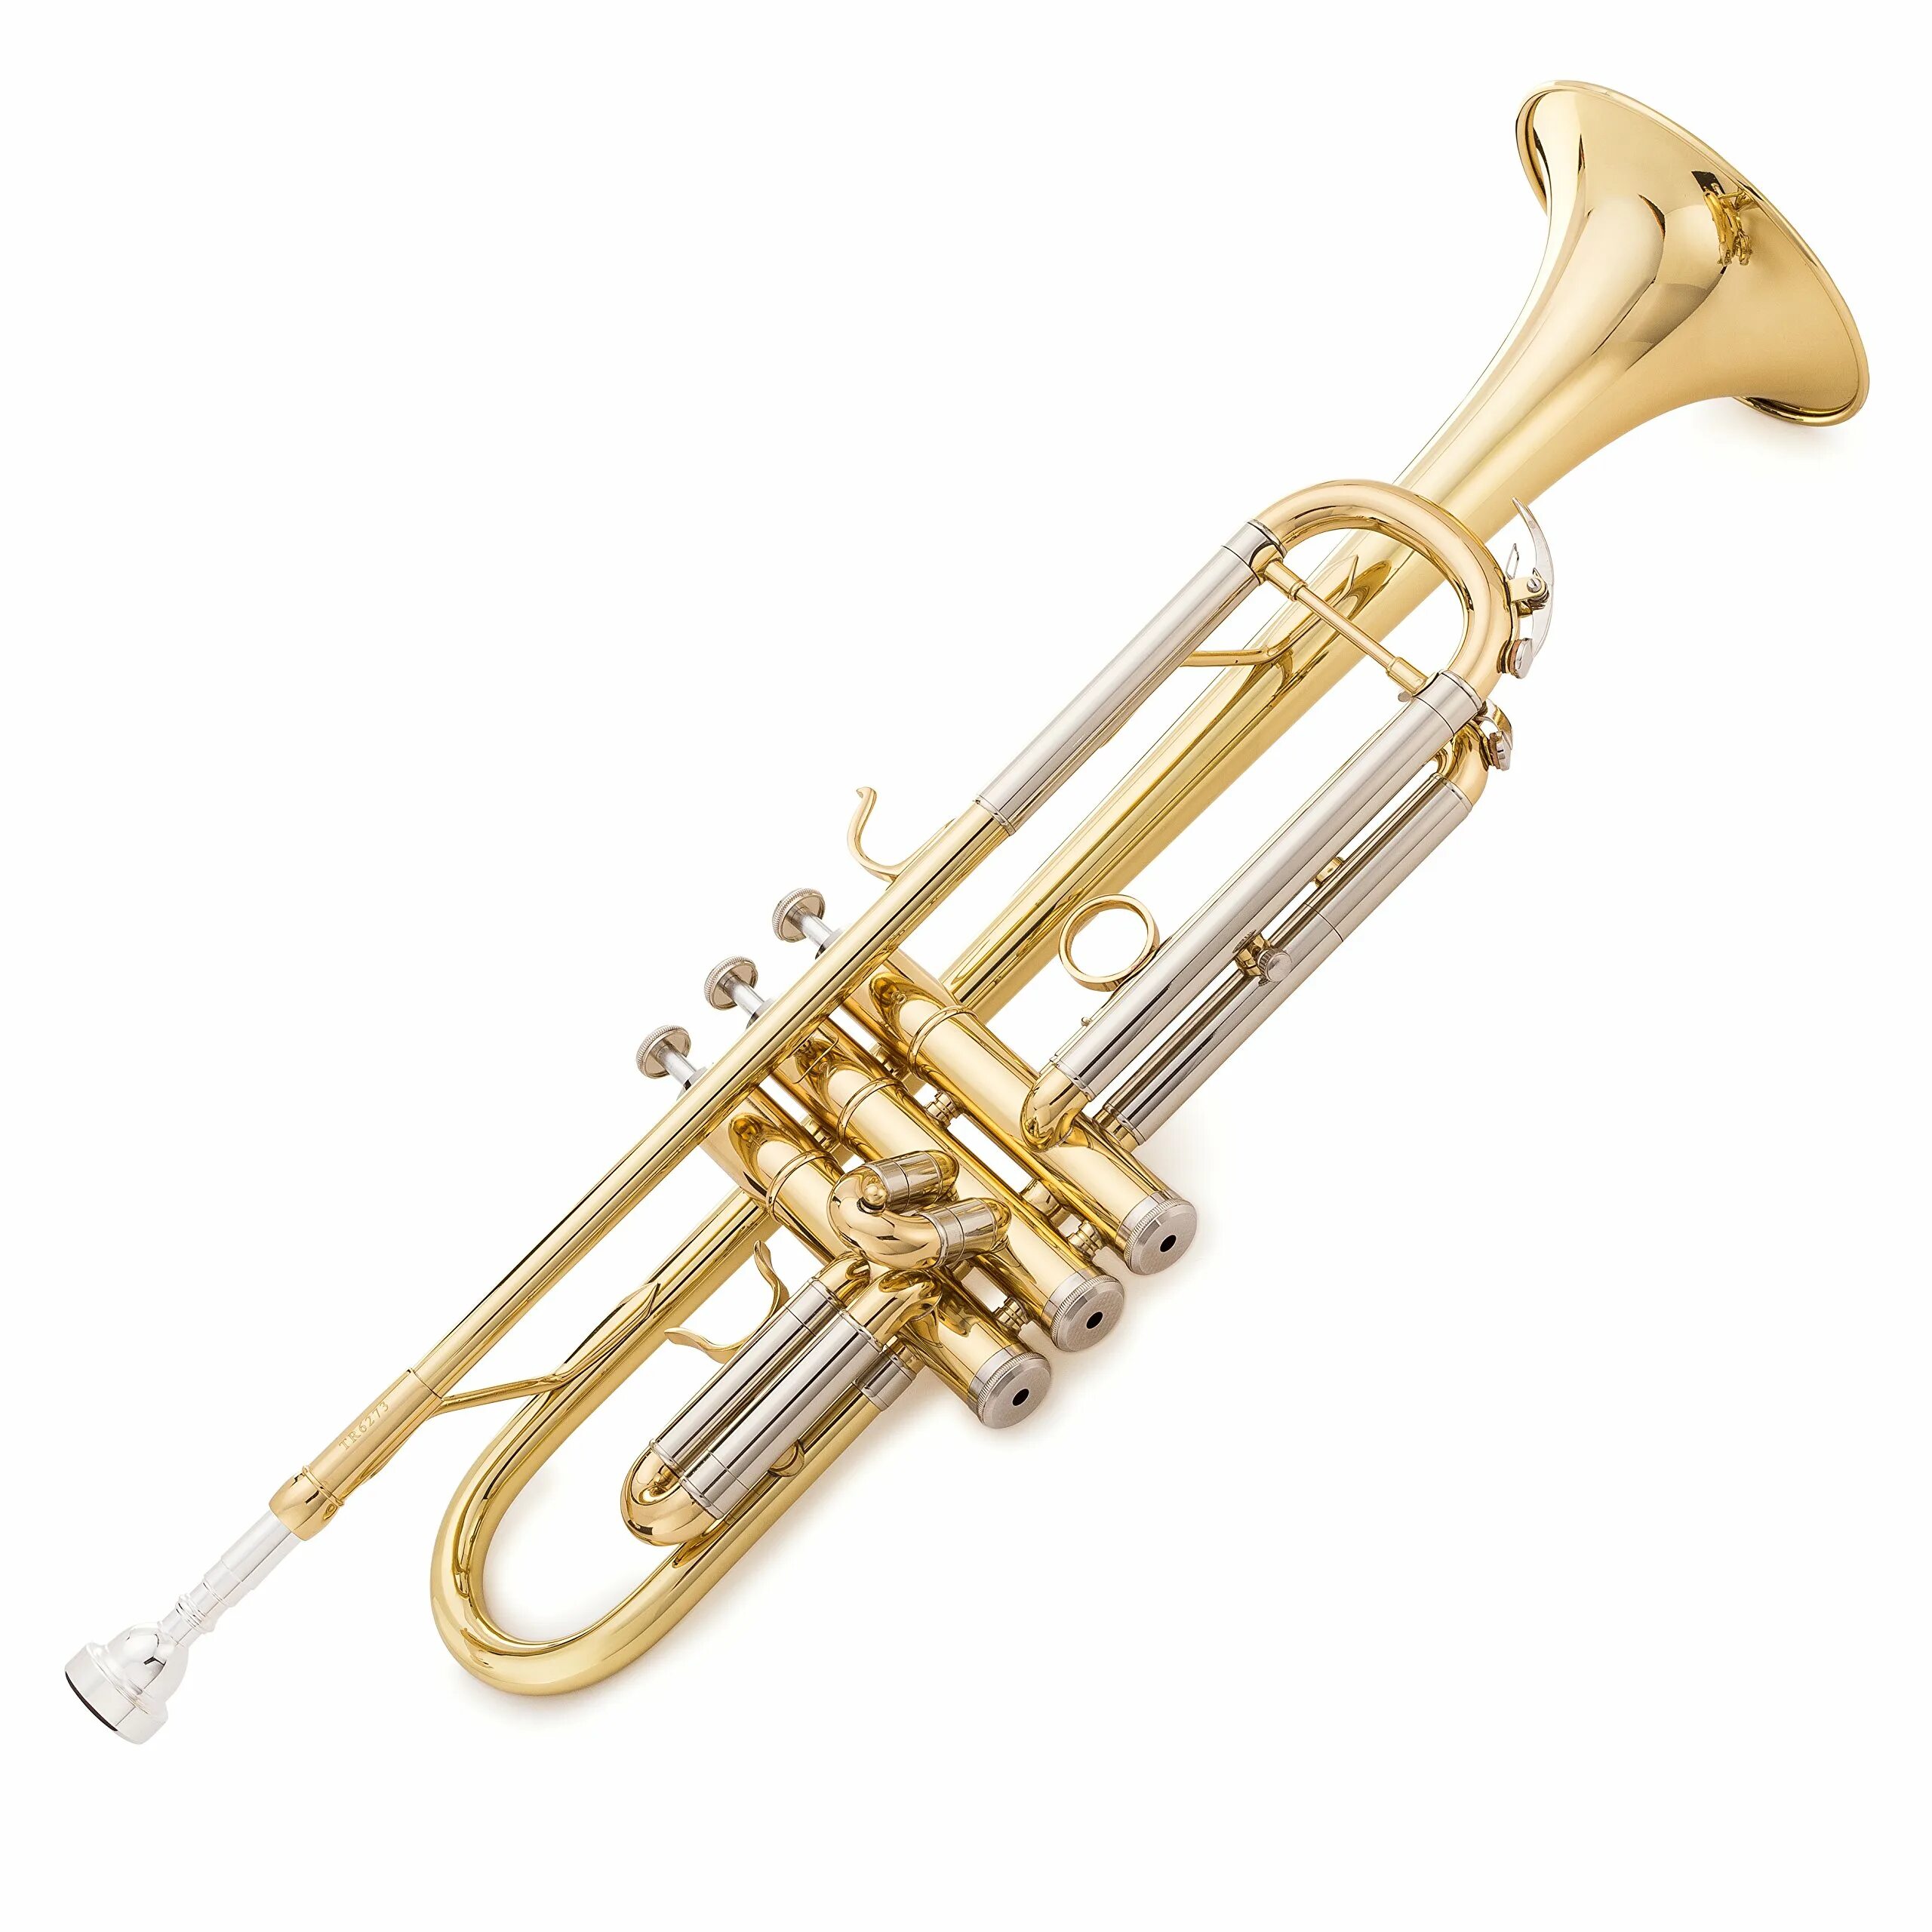 Труба звучание. Трумпет. Трампет инструмент. Музыкальный инструмент "труба". Трубные инструменты музыкальные.